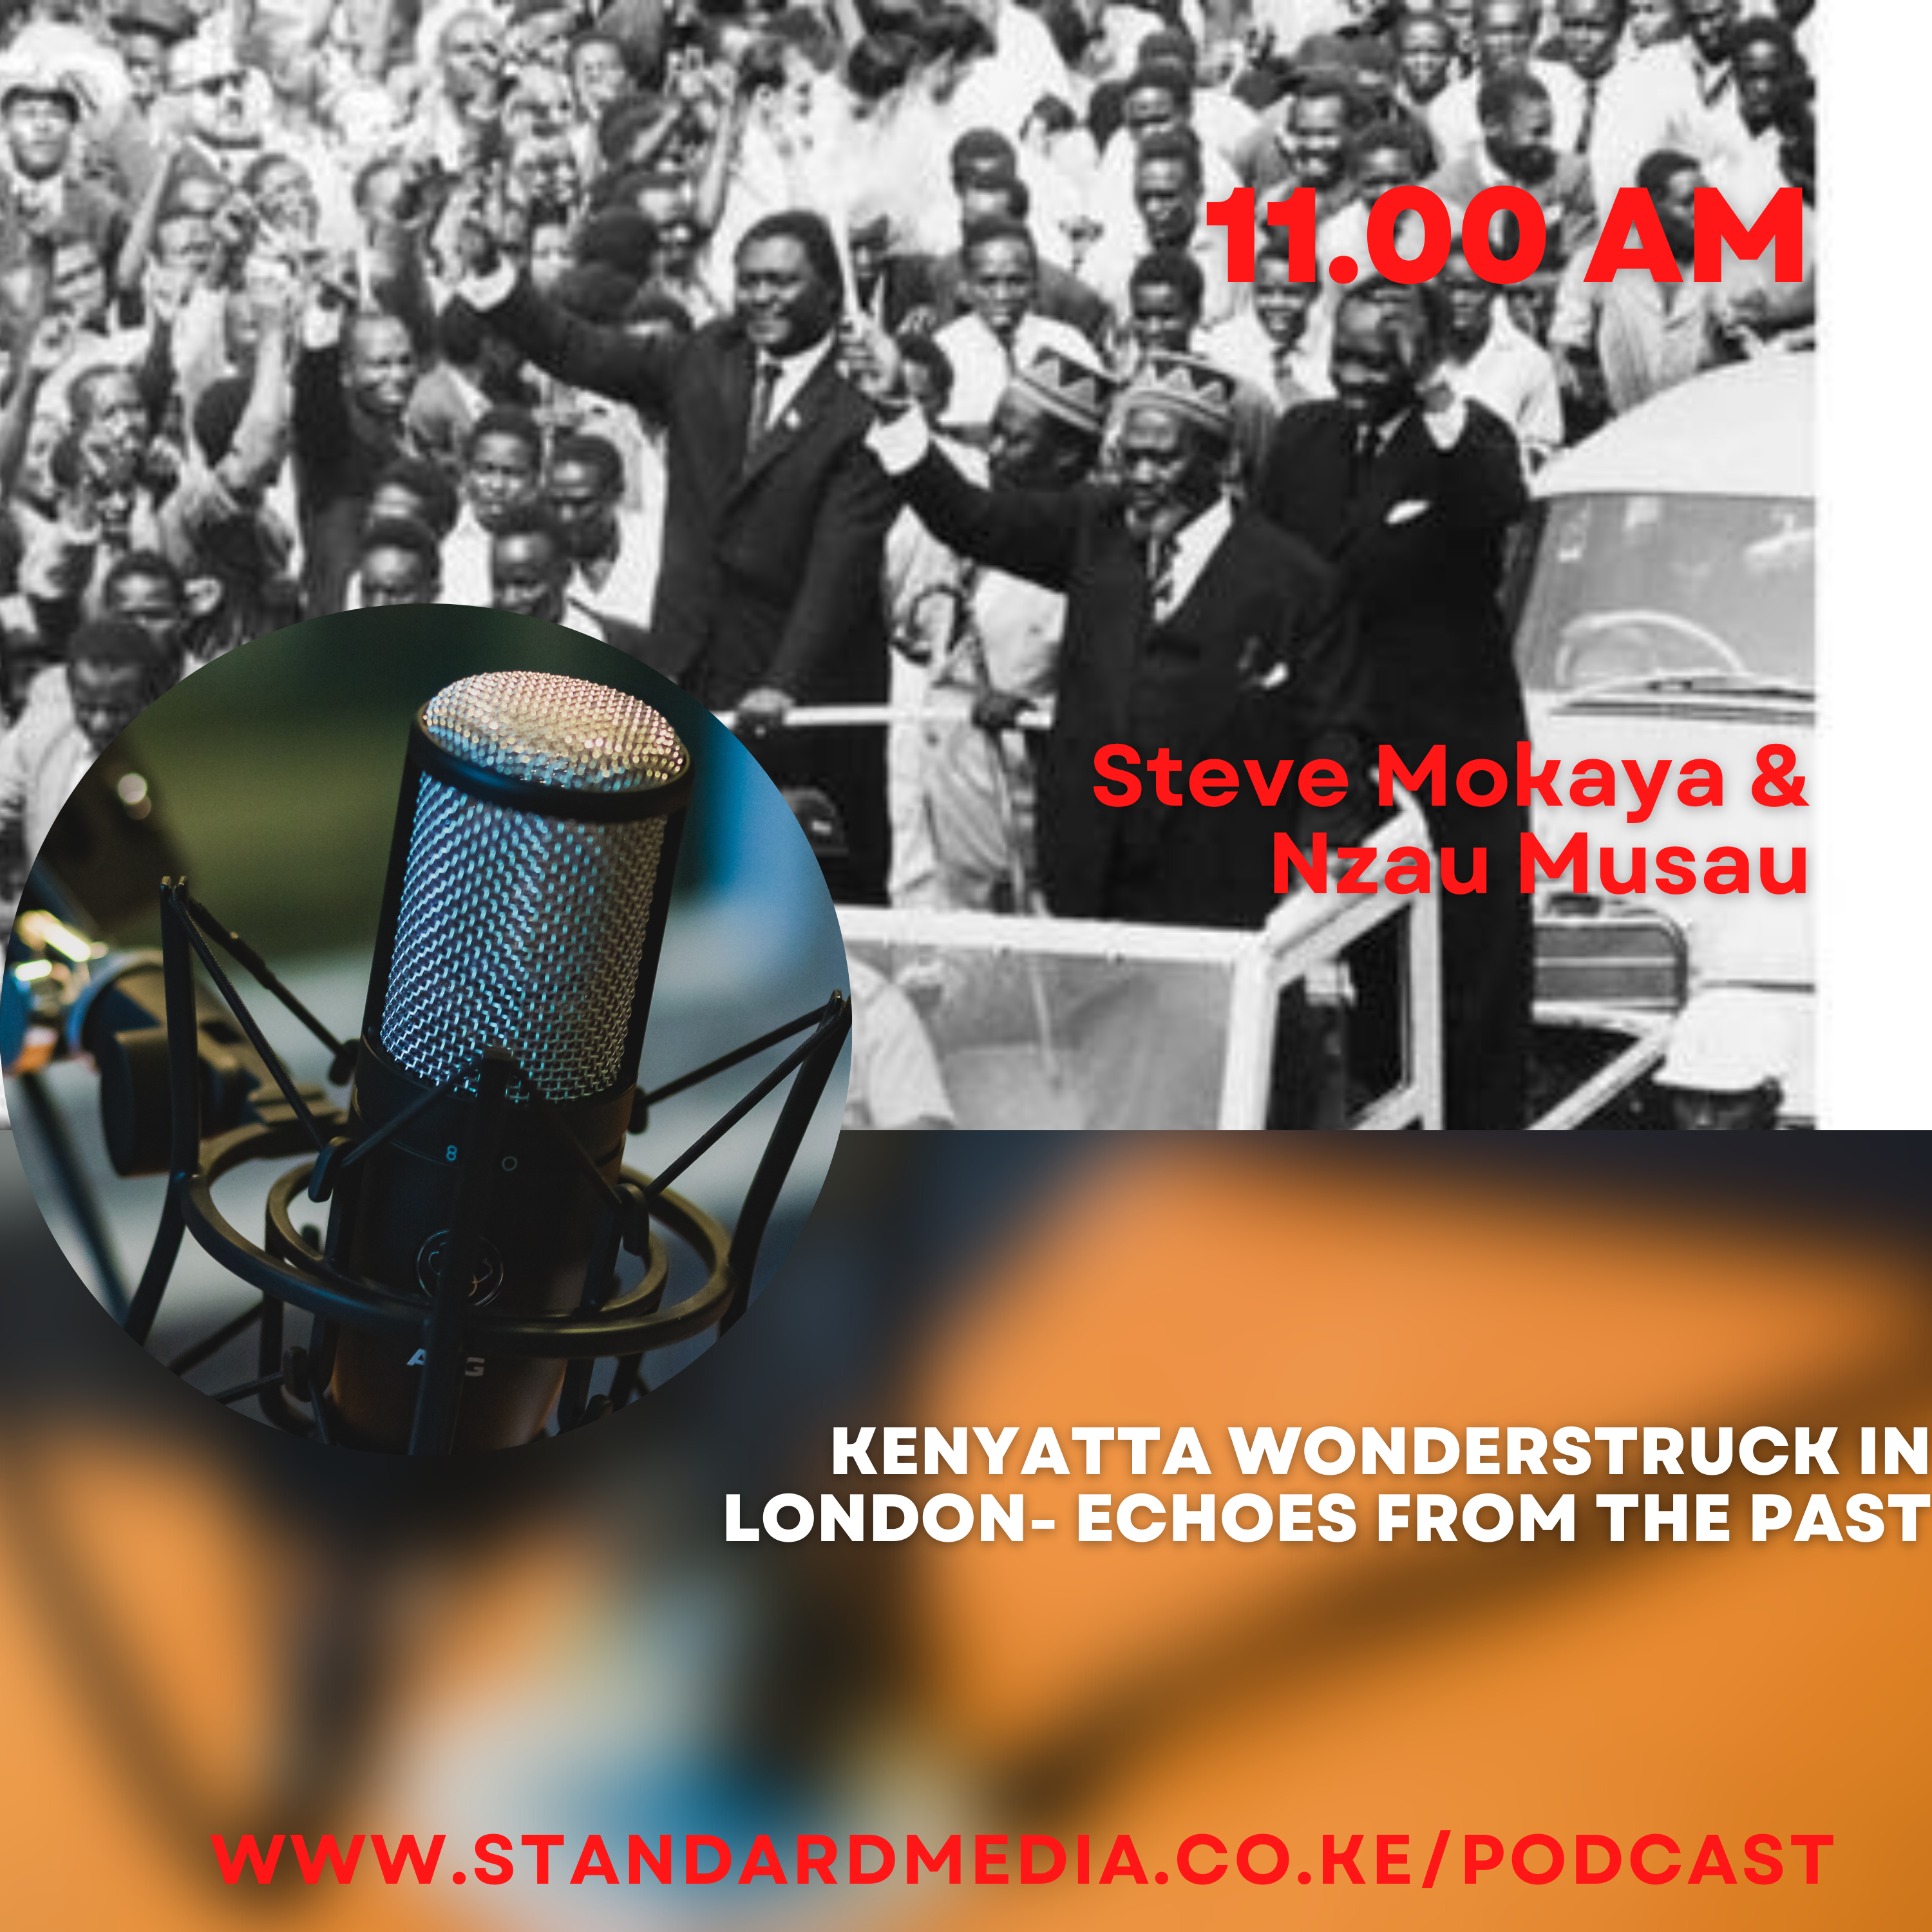 Kenyatta wonderstruck in London- Echoes from the past podcast